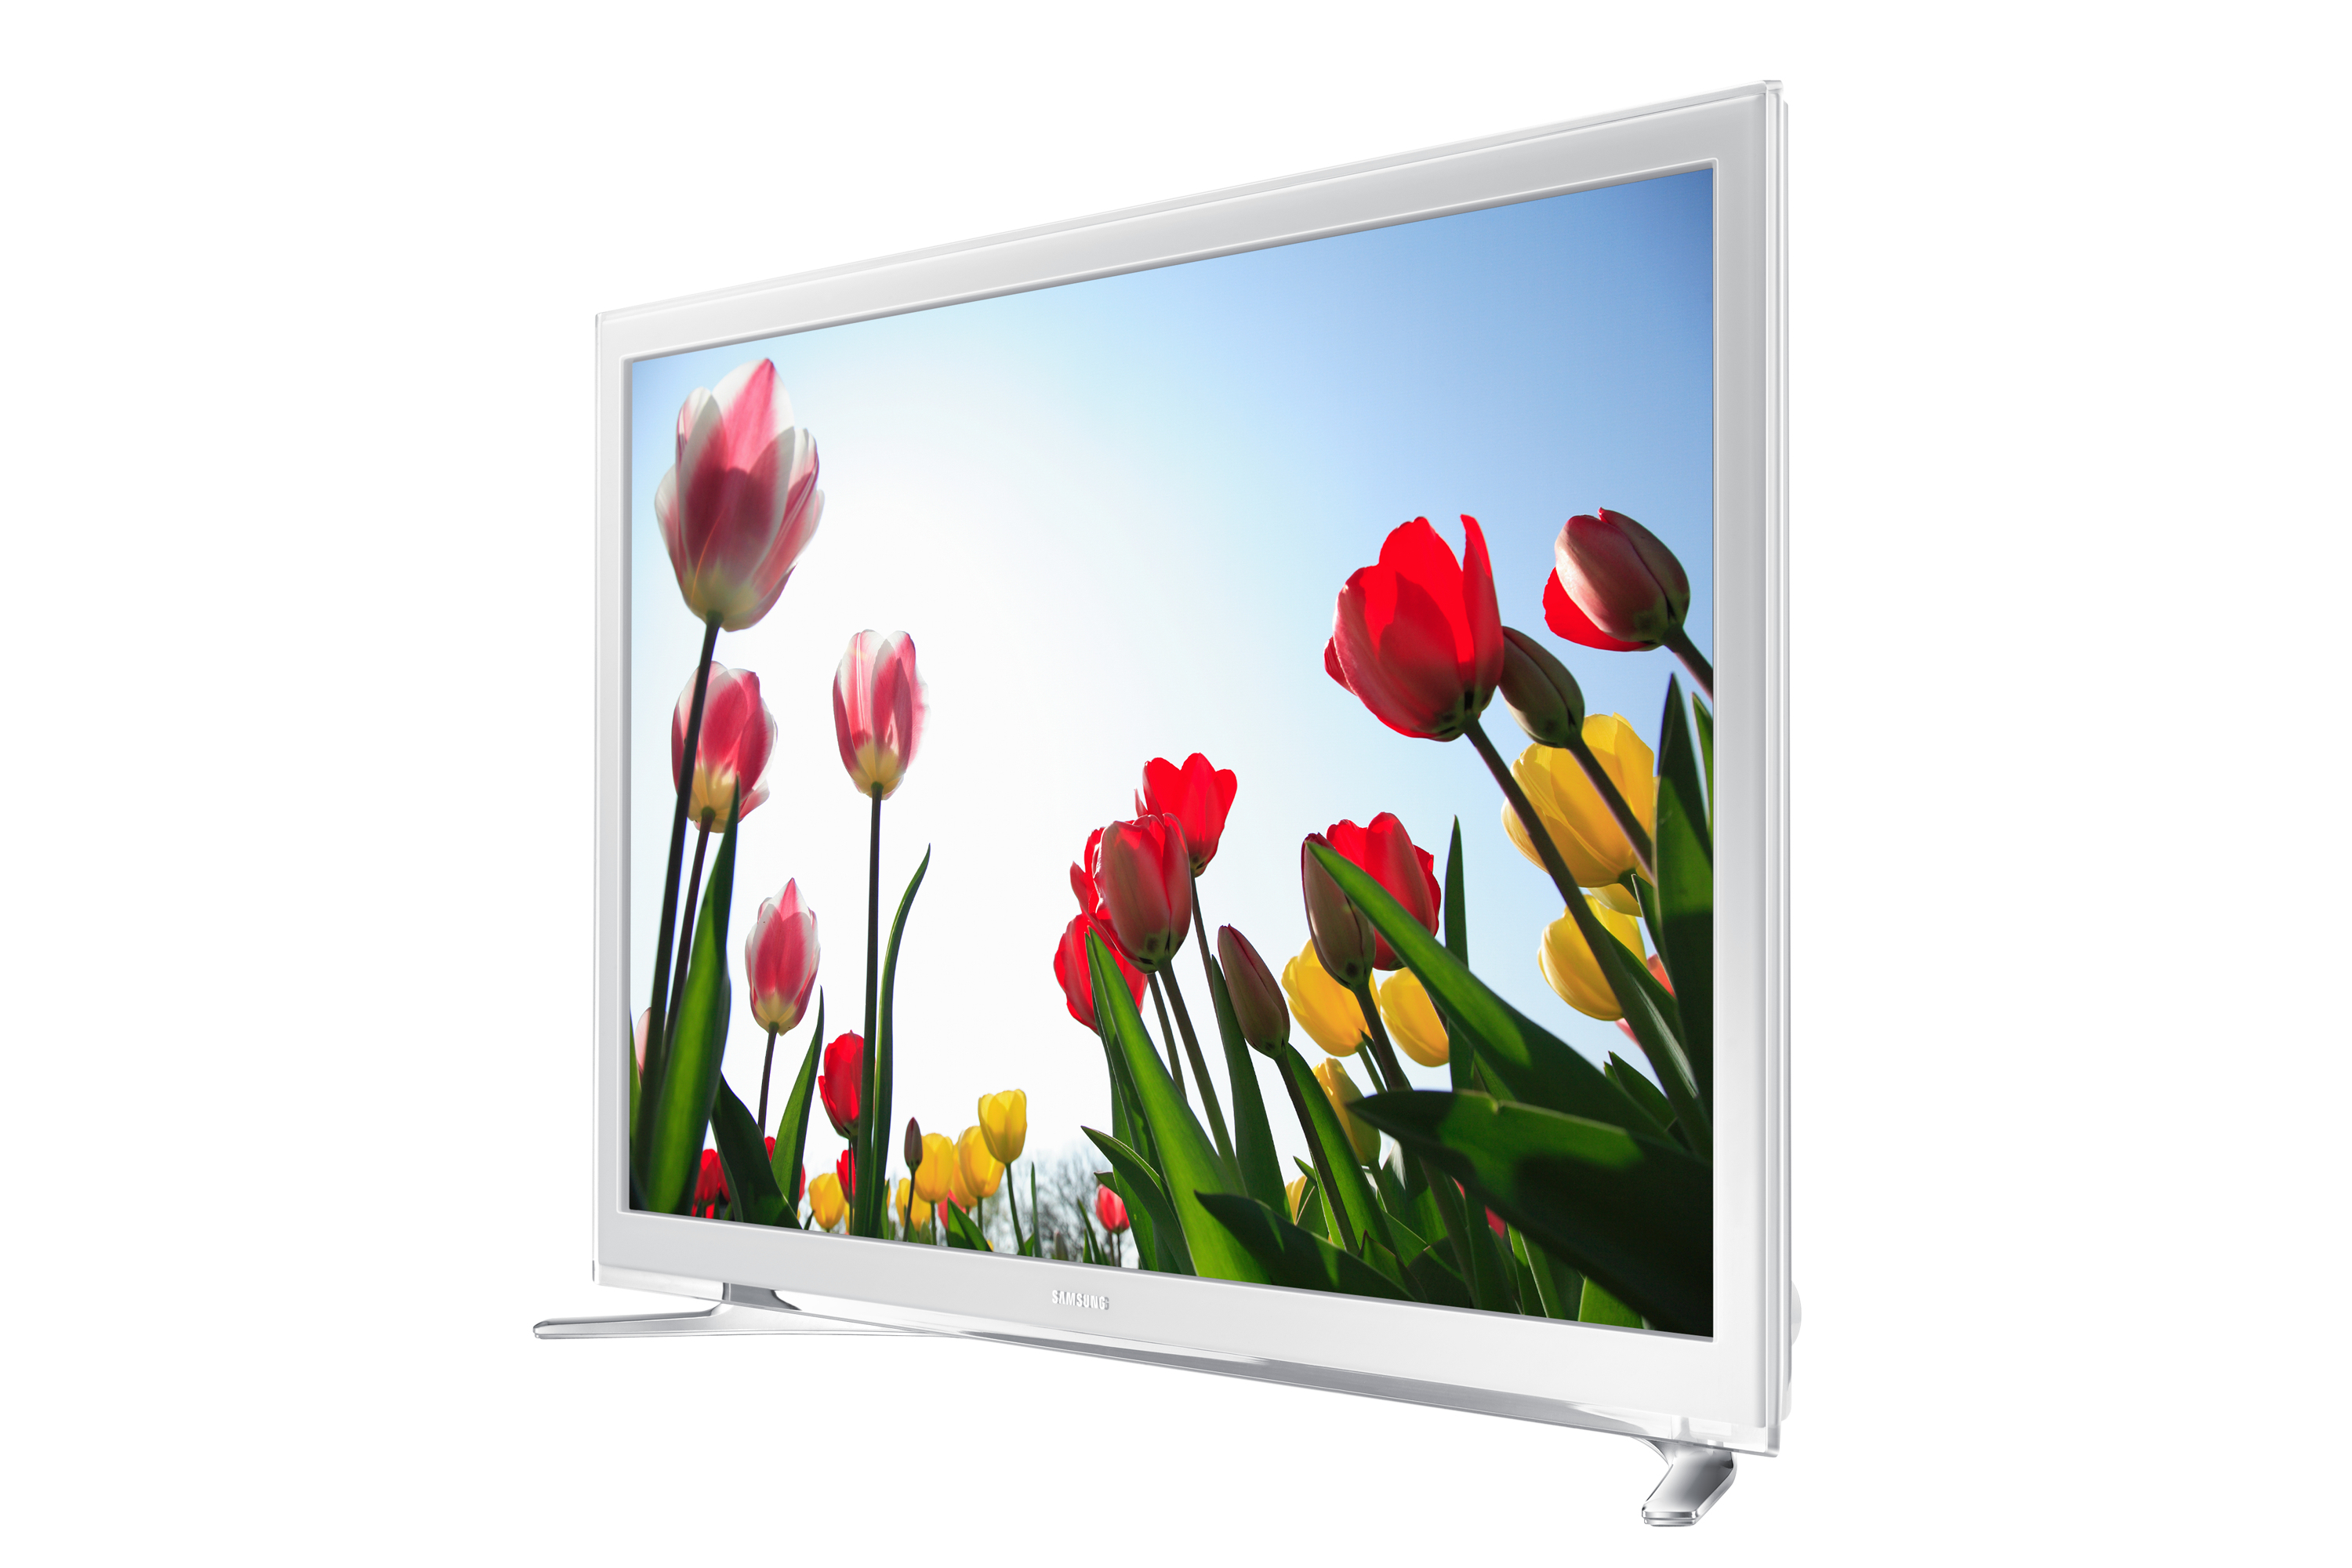 Телевизоры 32 дюйма купить в спб недорого. Samsung ue32h4510. Samsung Smart TV 32 дюйма белый. Samsung ue22f5410. 22h5610samsung.